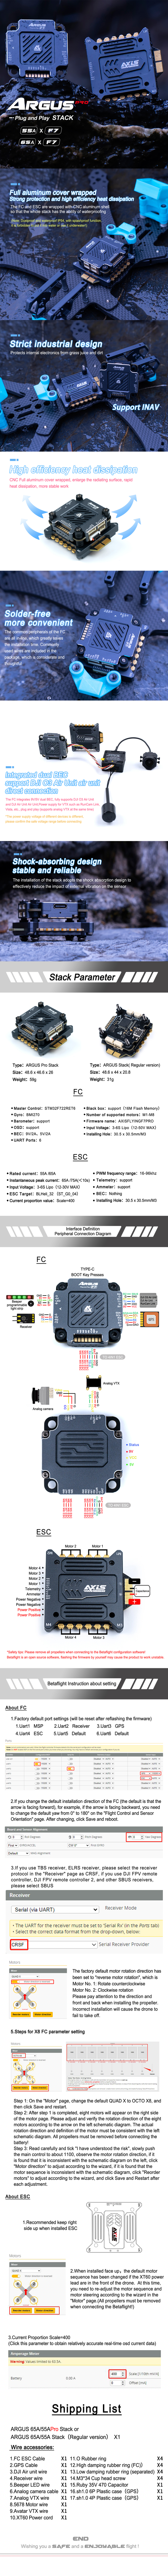 Axisflying Argus Plug and Play STACK 55A/65A & F7  Plug and Play Stack  ESC,FC,stack,50A ESC,F722 FC,Bl-heli 32 bit,128khz,Plug&Play,Plug and Play